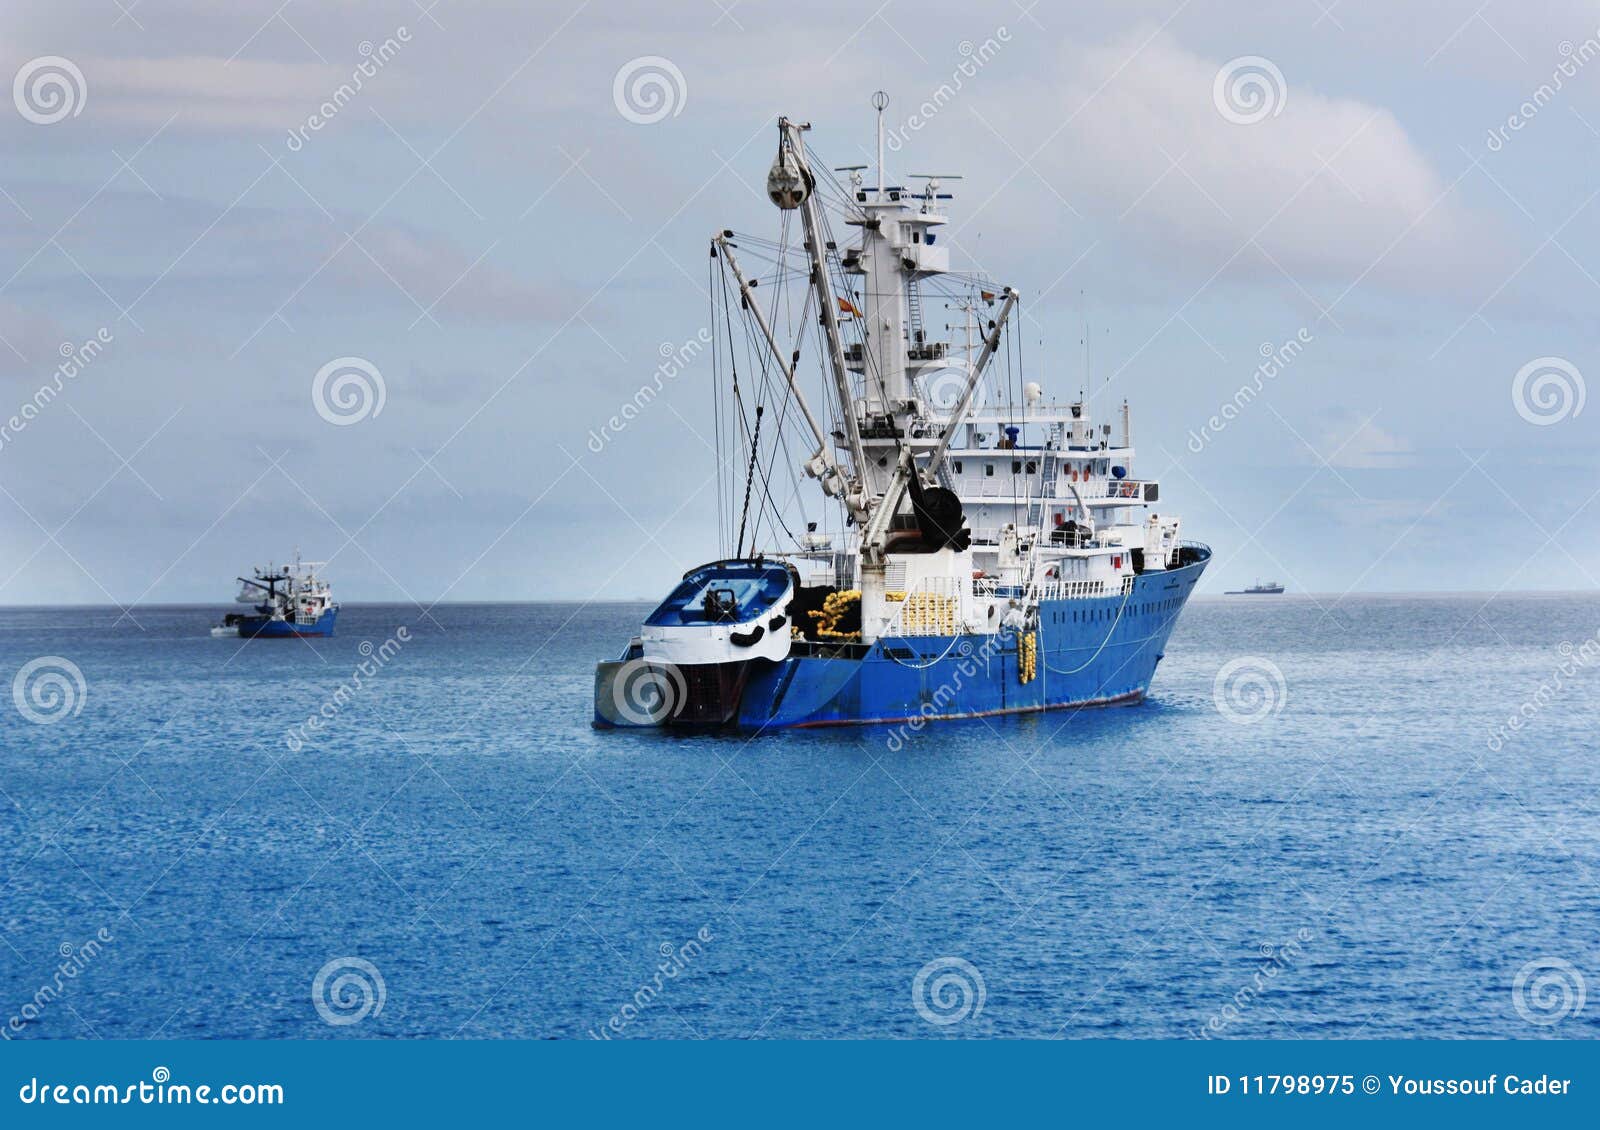 industrial fishing vessel